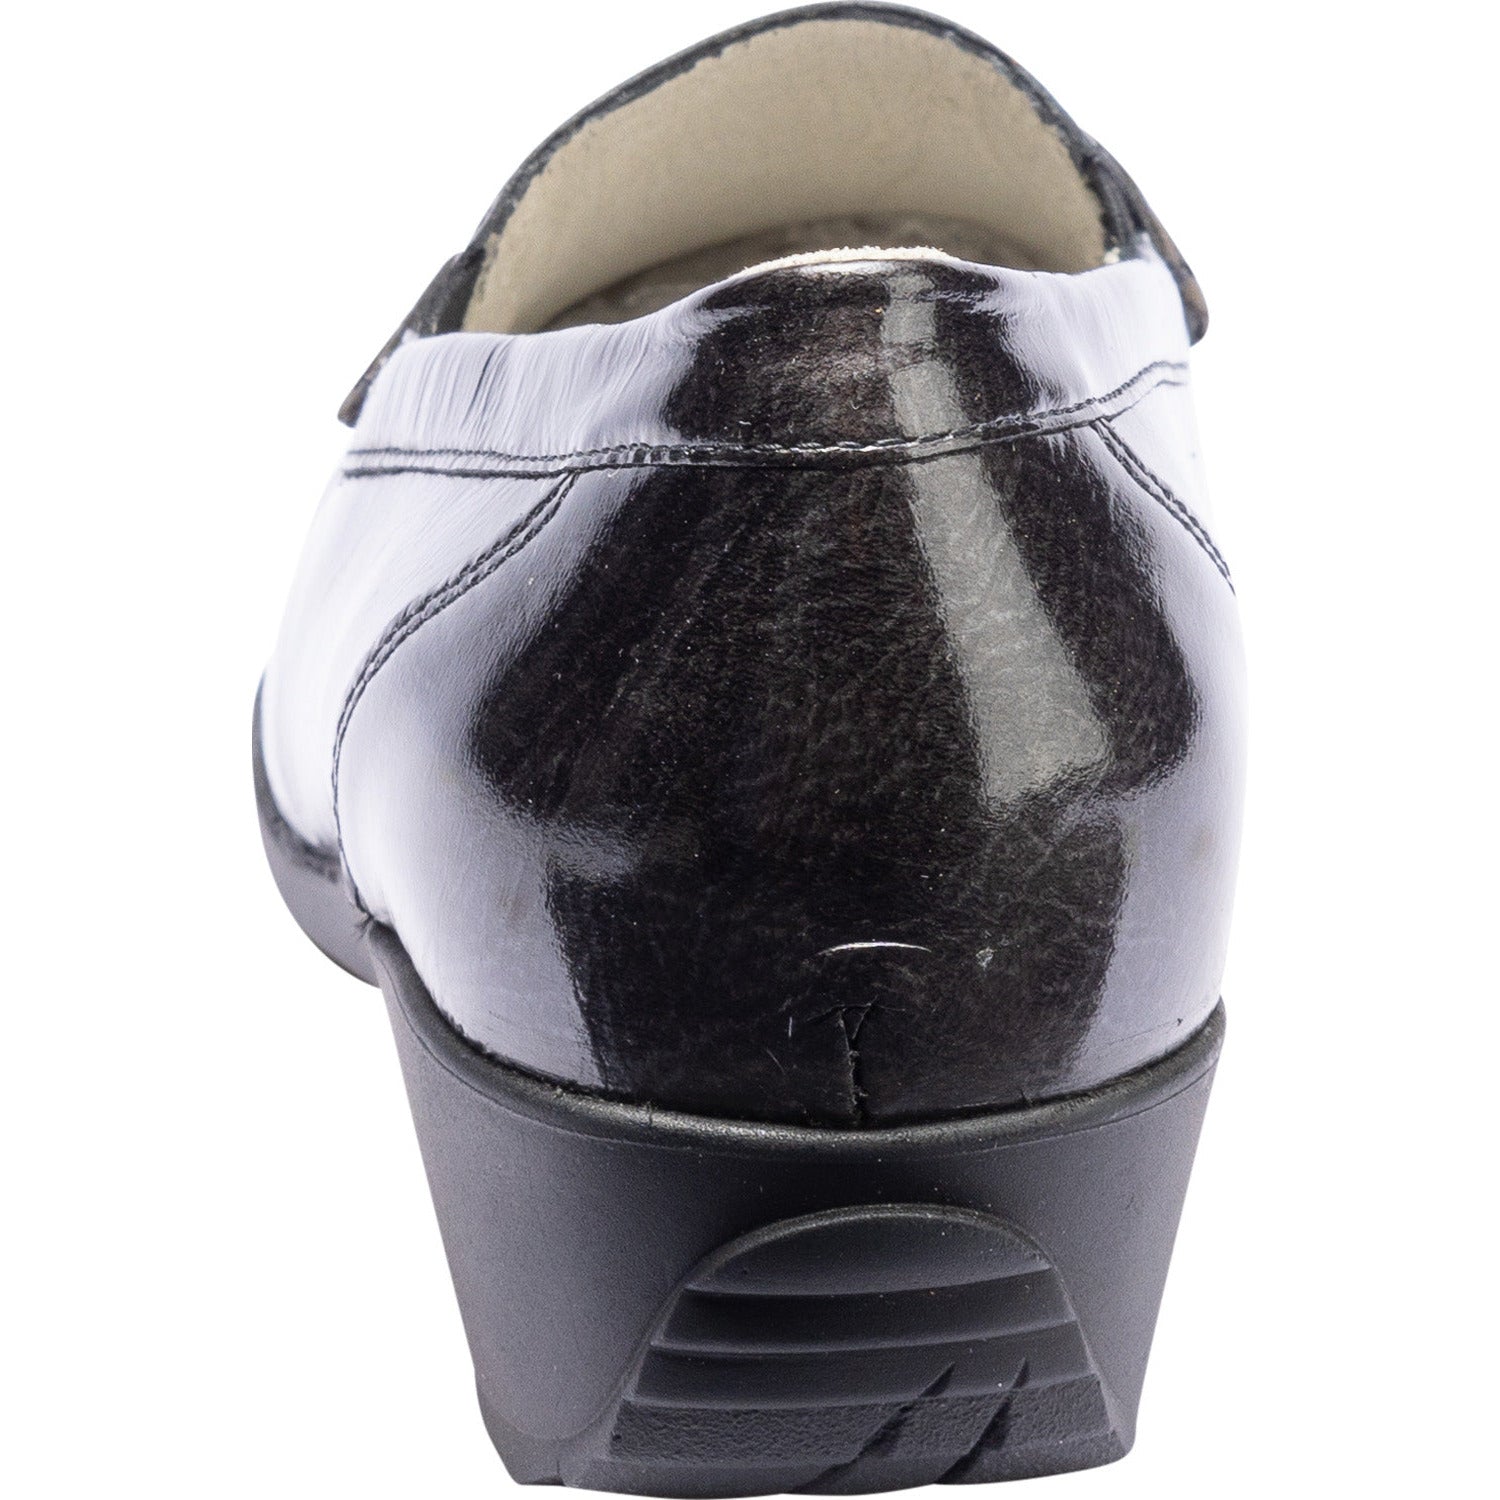 Waldlaufer Hanin (348501) - Ladies Slip On Shoe in Black Patent |